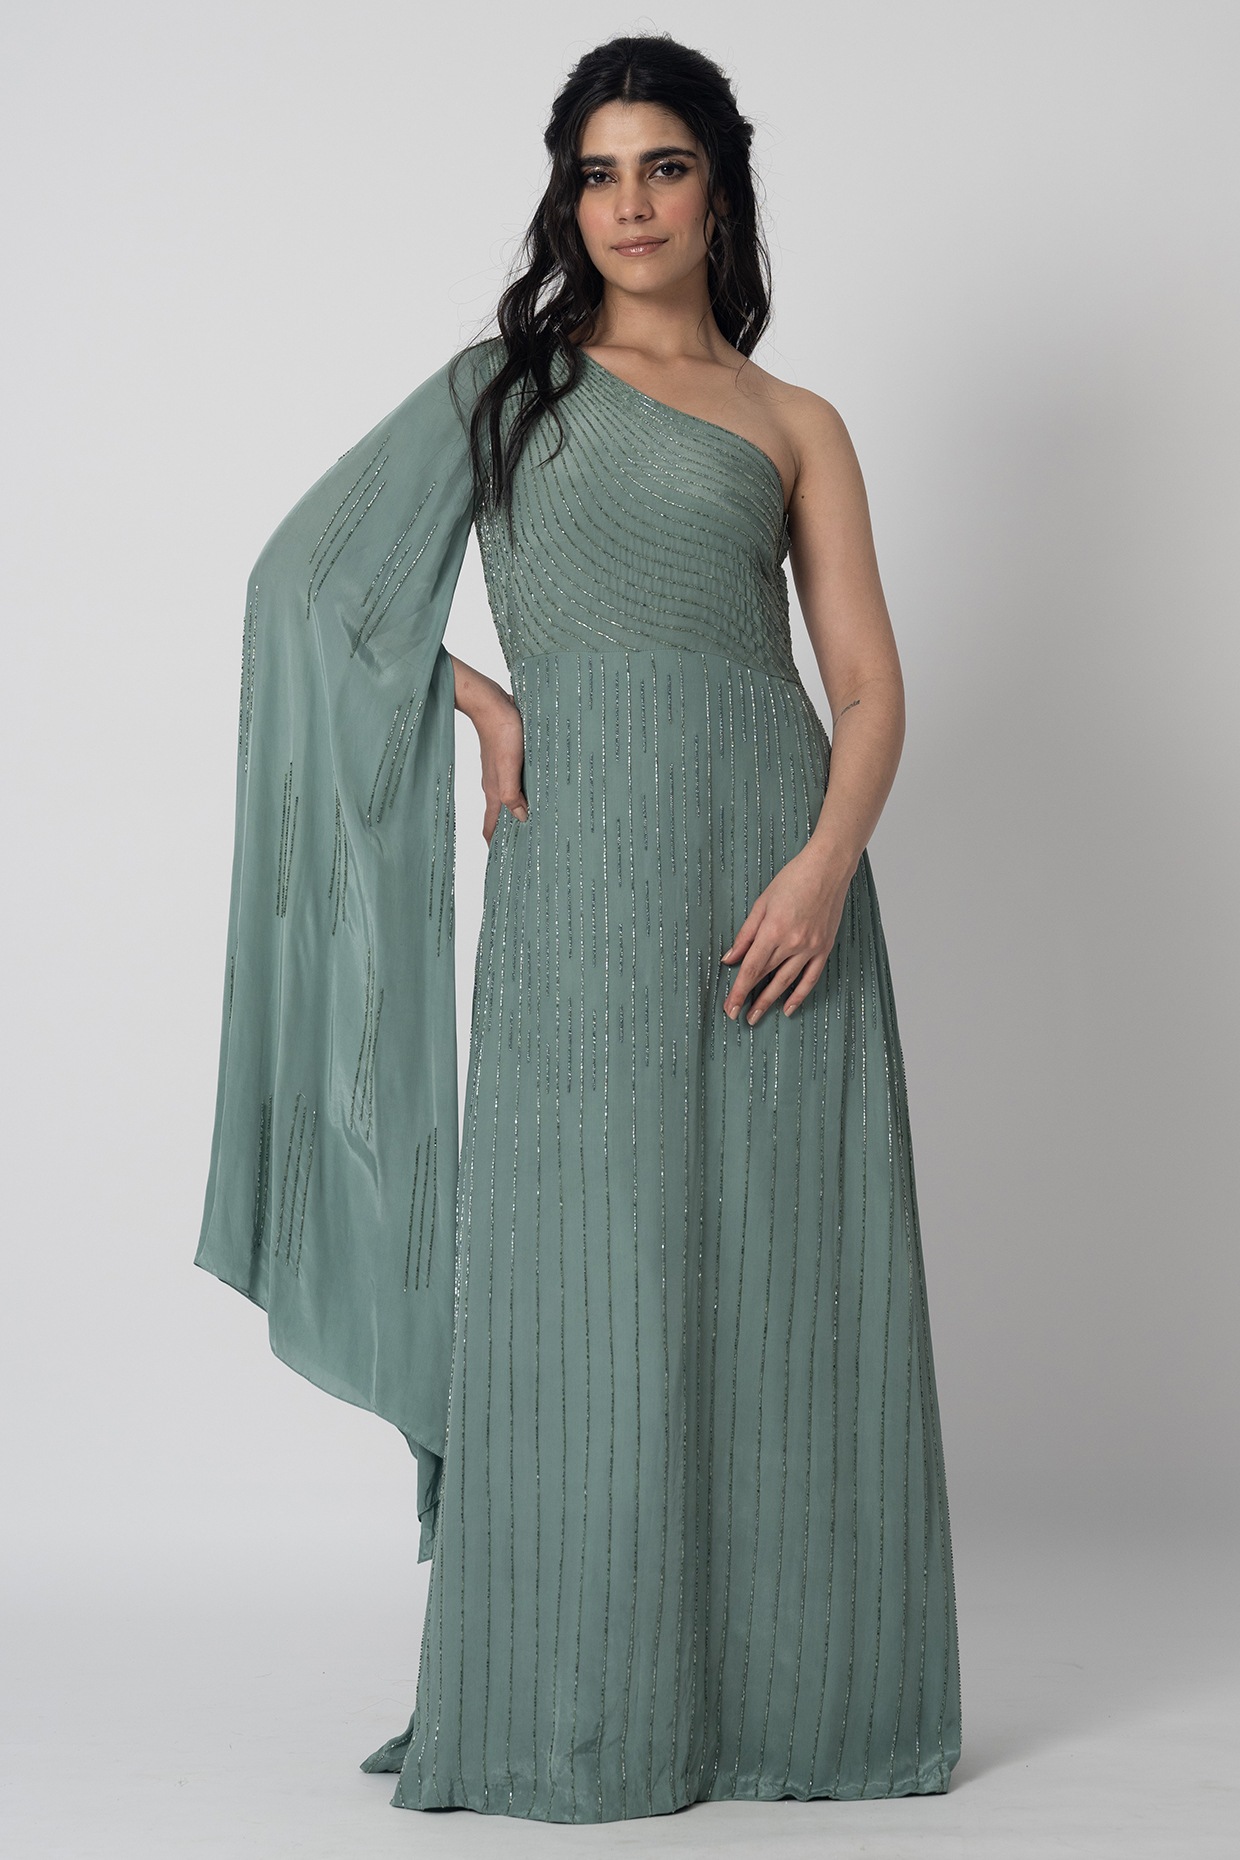 Emerald Green Gown – Mynah Designs